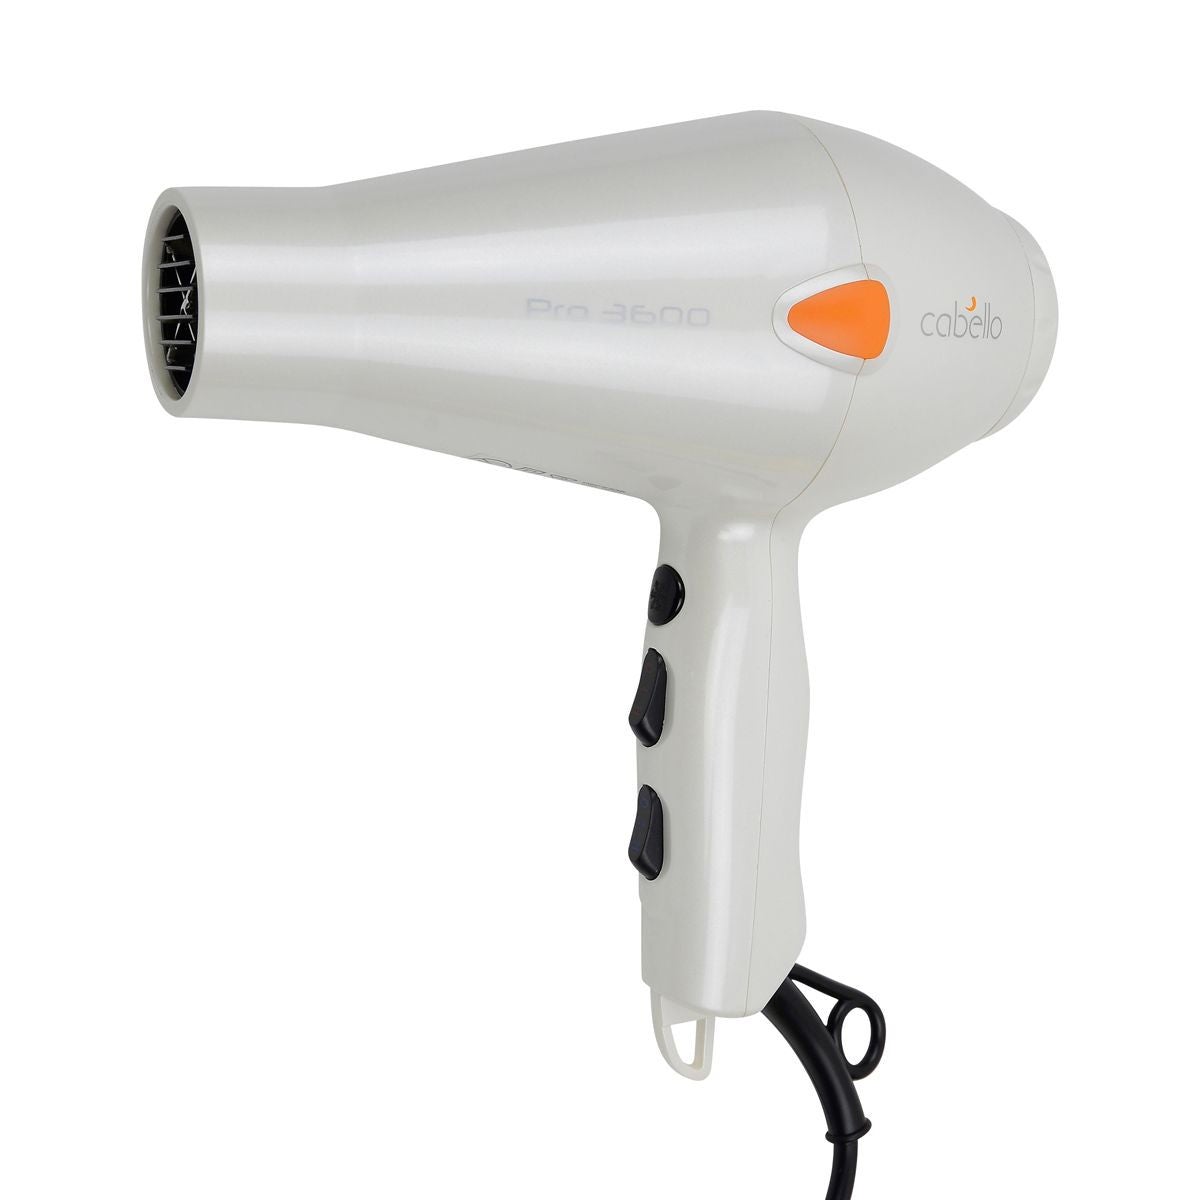 Cabello Professional Hair Dryer PRO 3600 - White